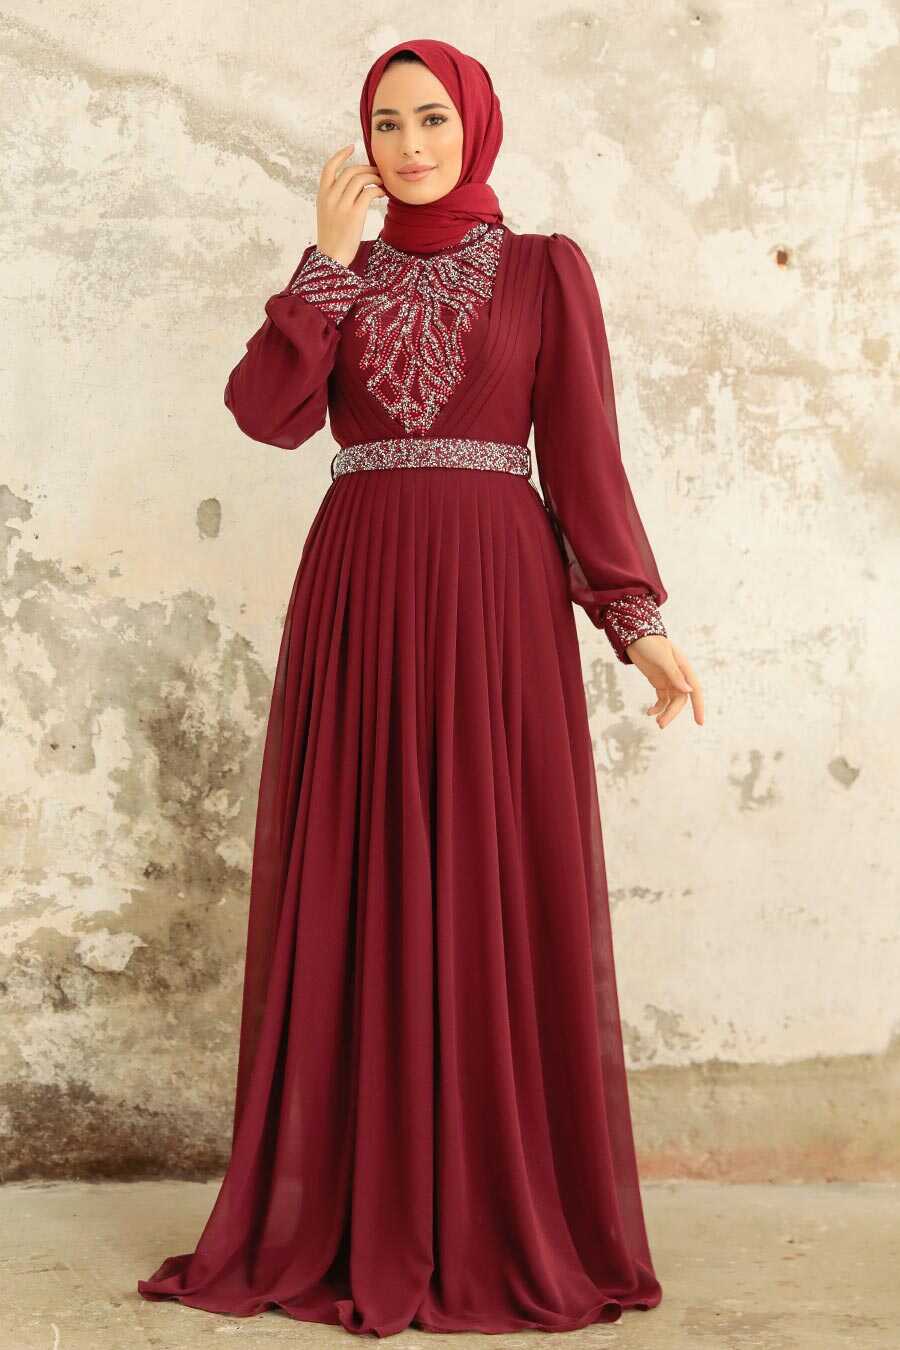 Neva Style - Elegant Claret Red Muslim Long Sleeve Dress 3773BR